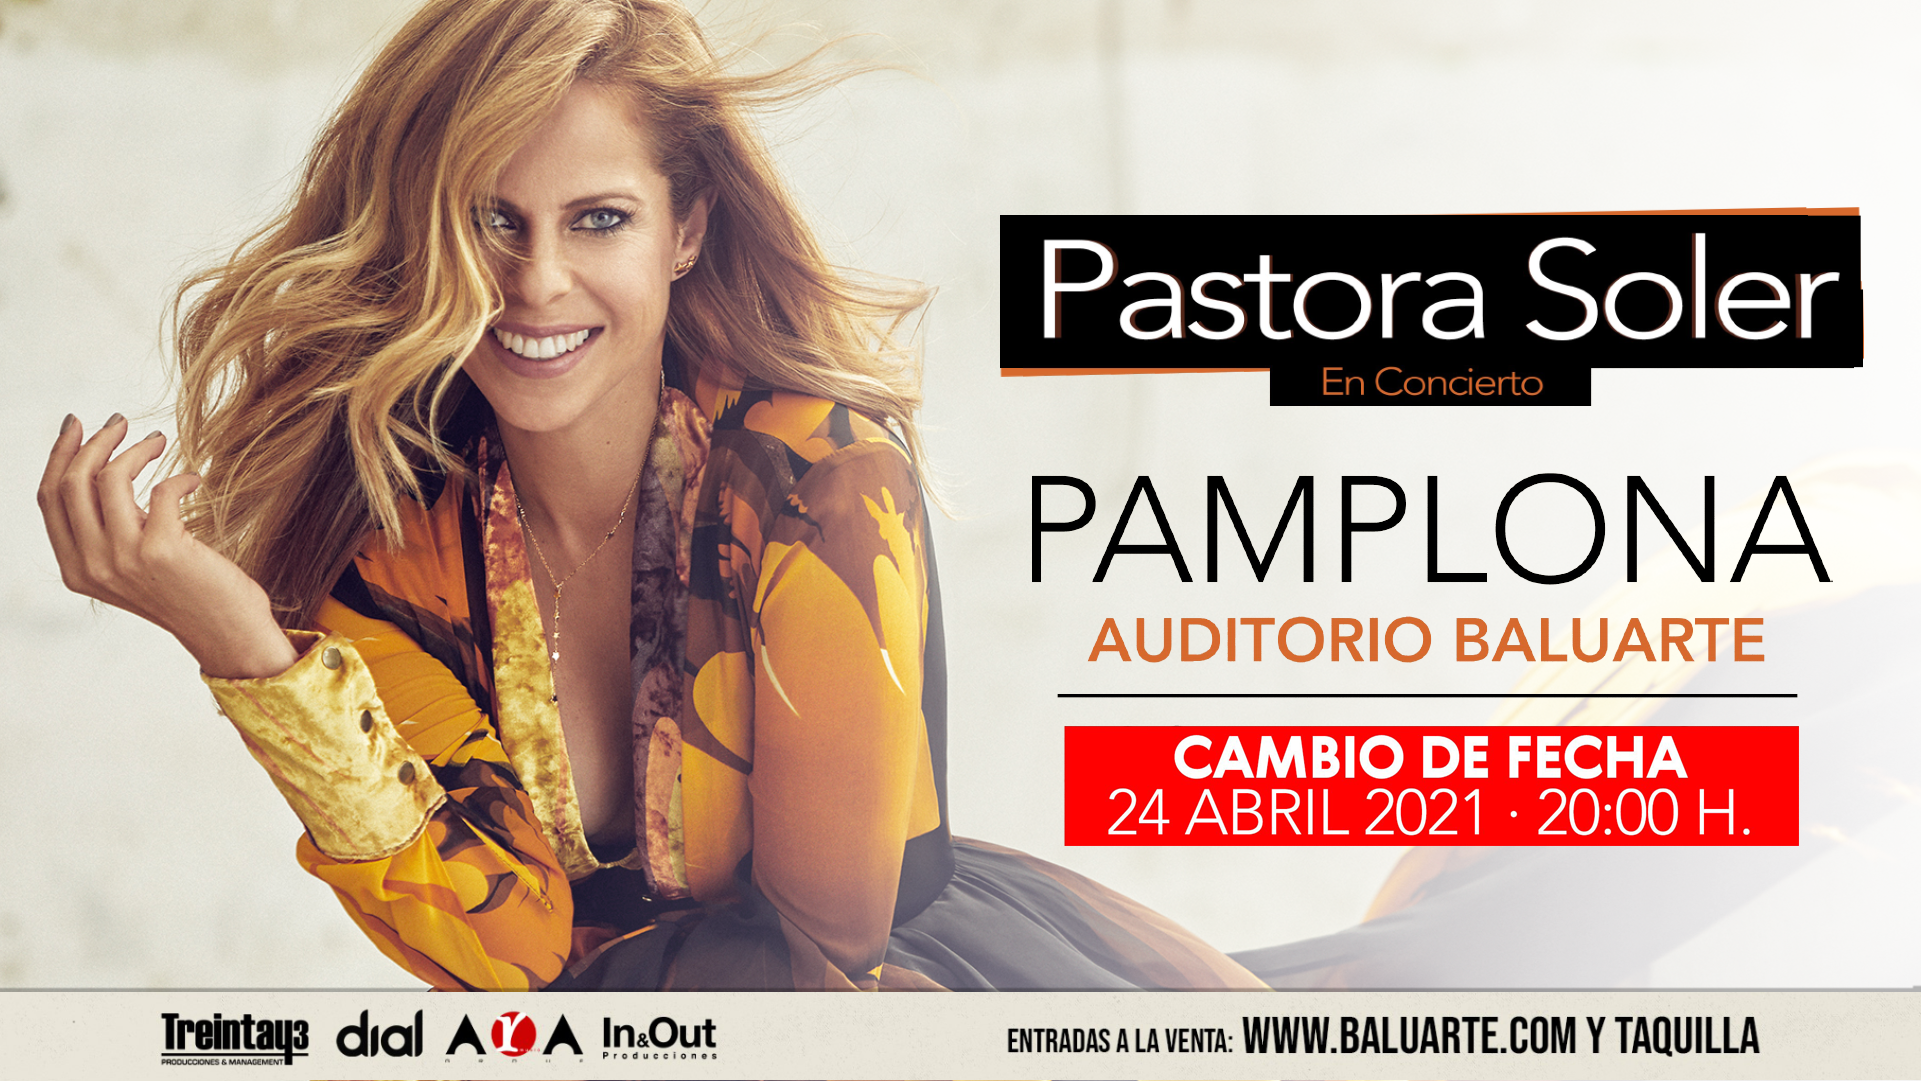 Pastora Soler en concierto en Pamplona en 2021